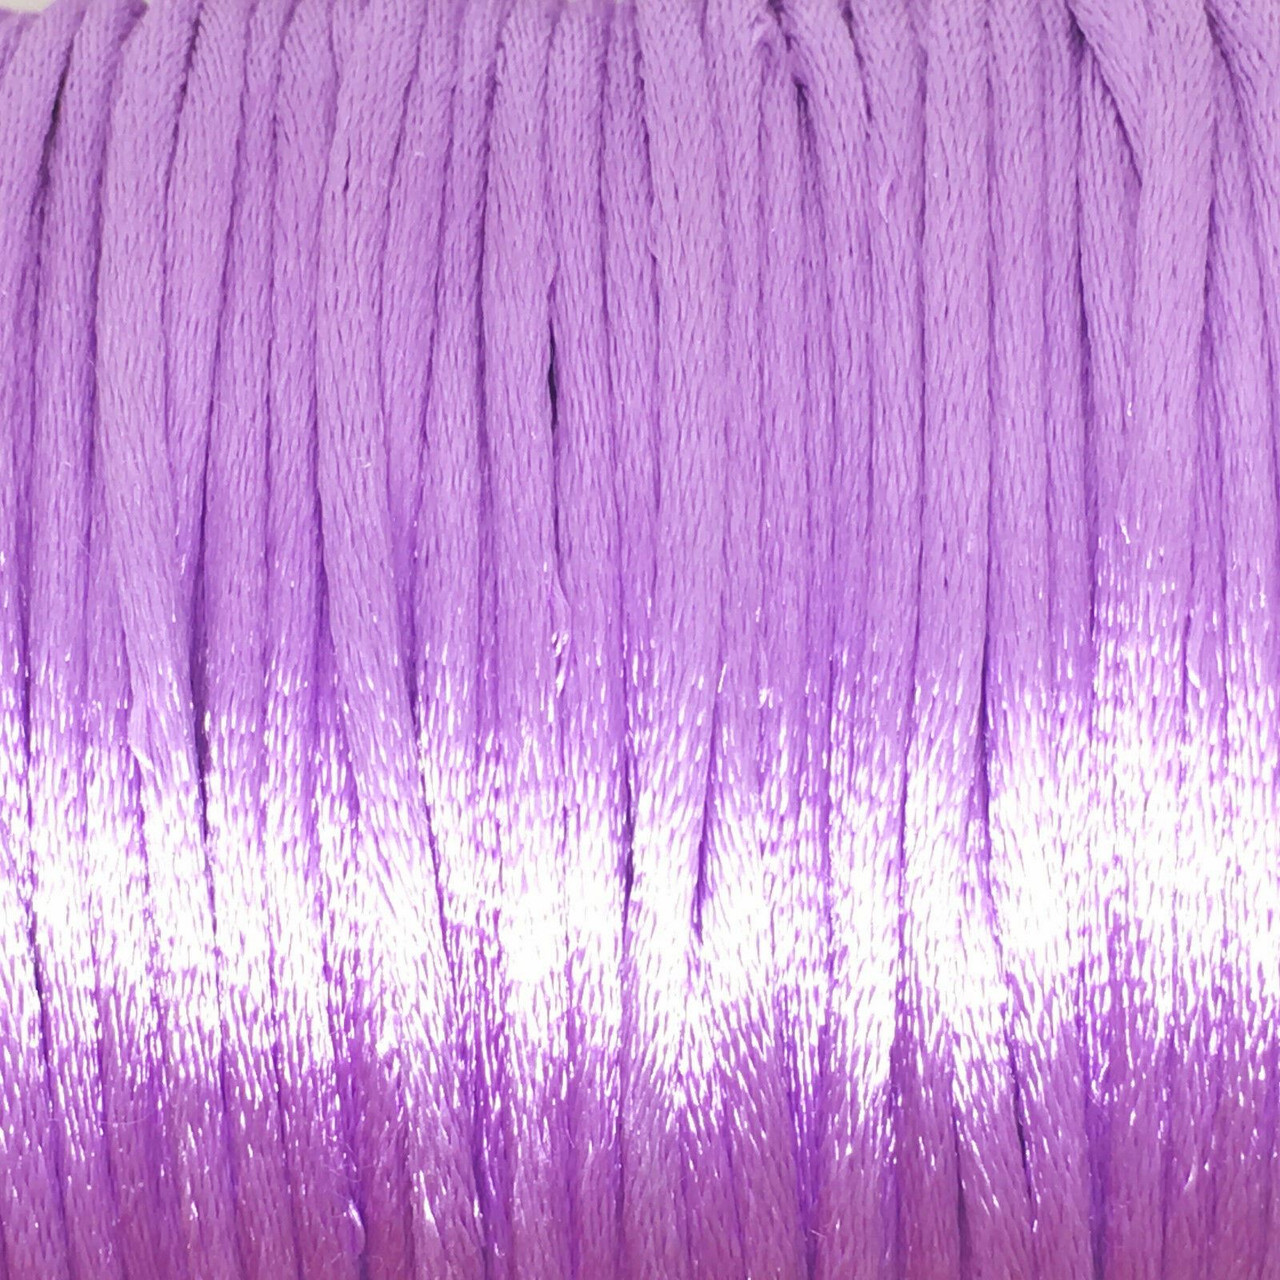 2x Reels of Nylon Cord (Rattail) - Light Purple, approx 45m each